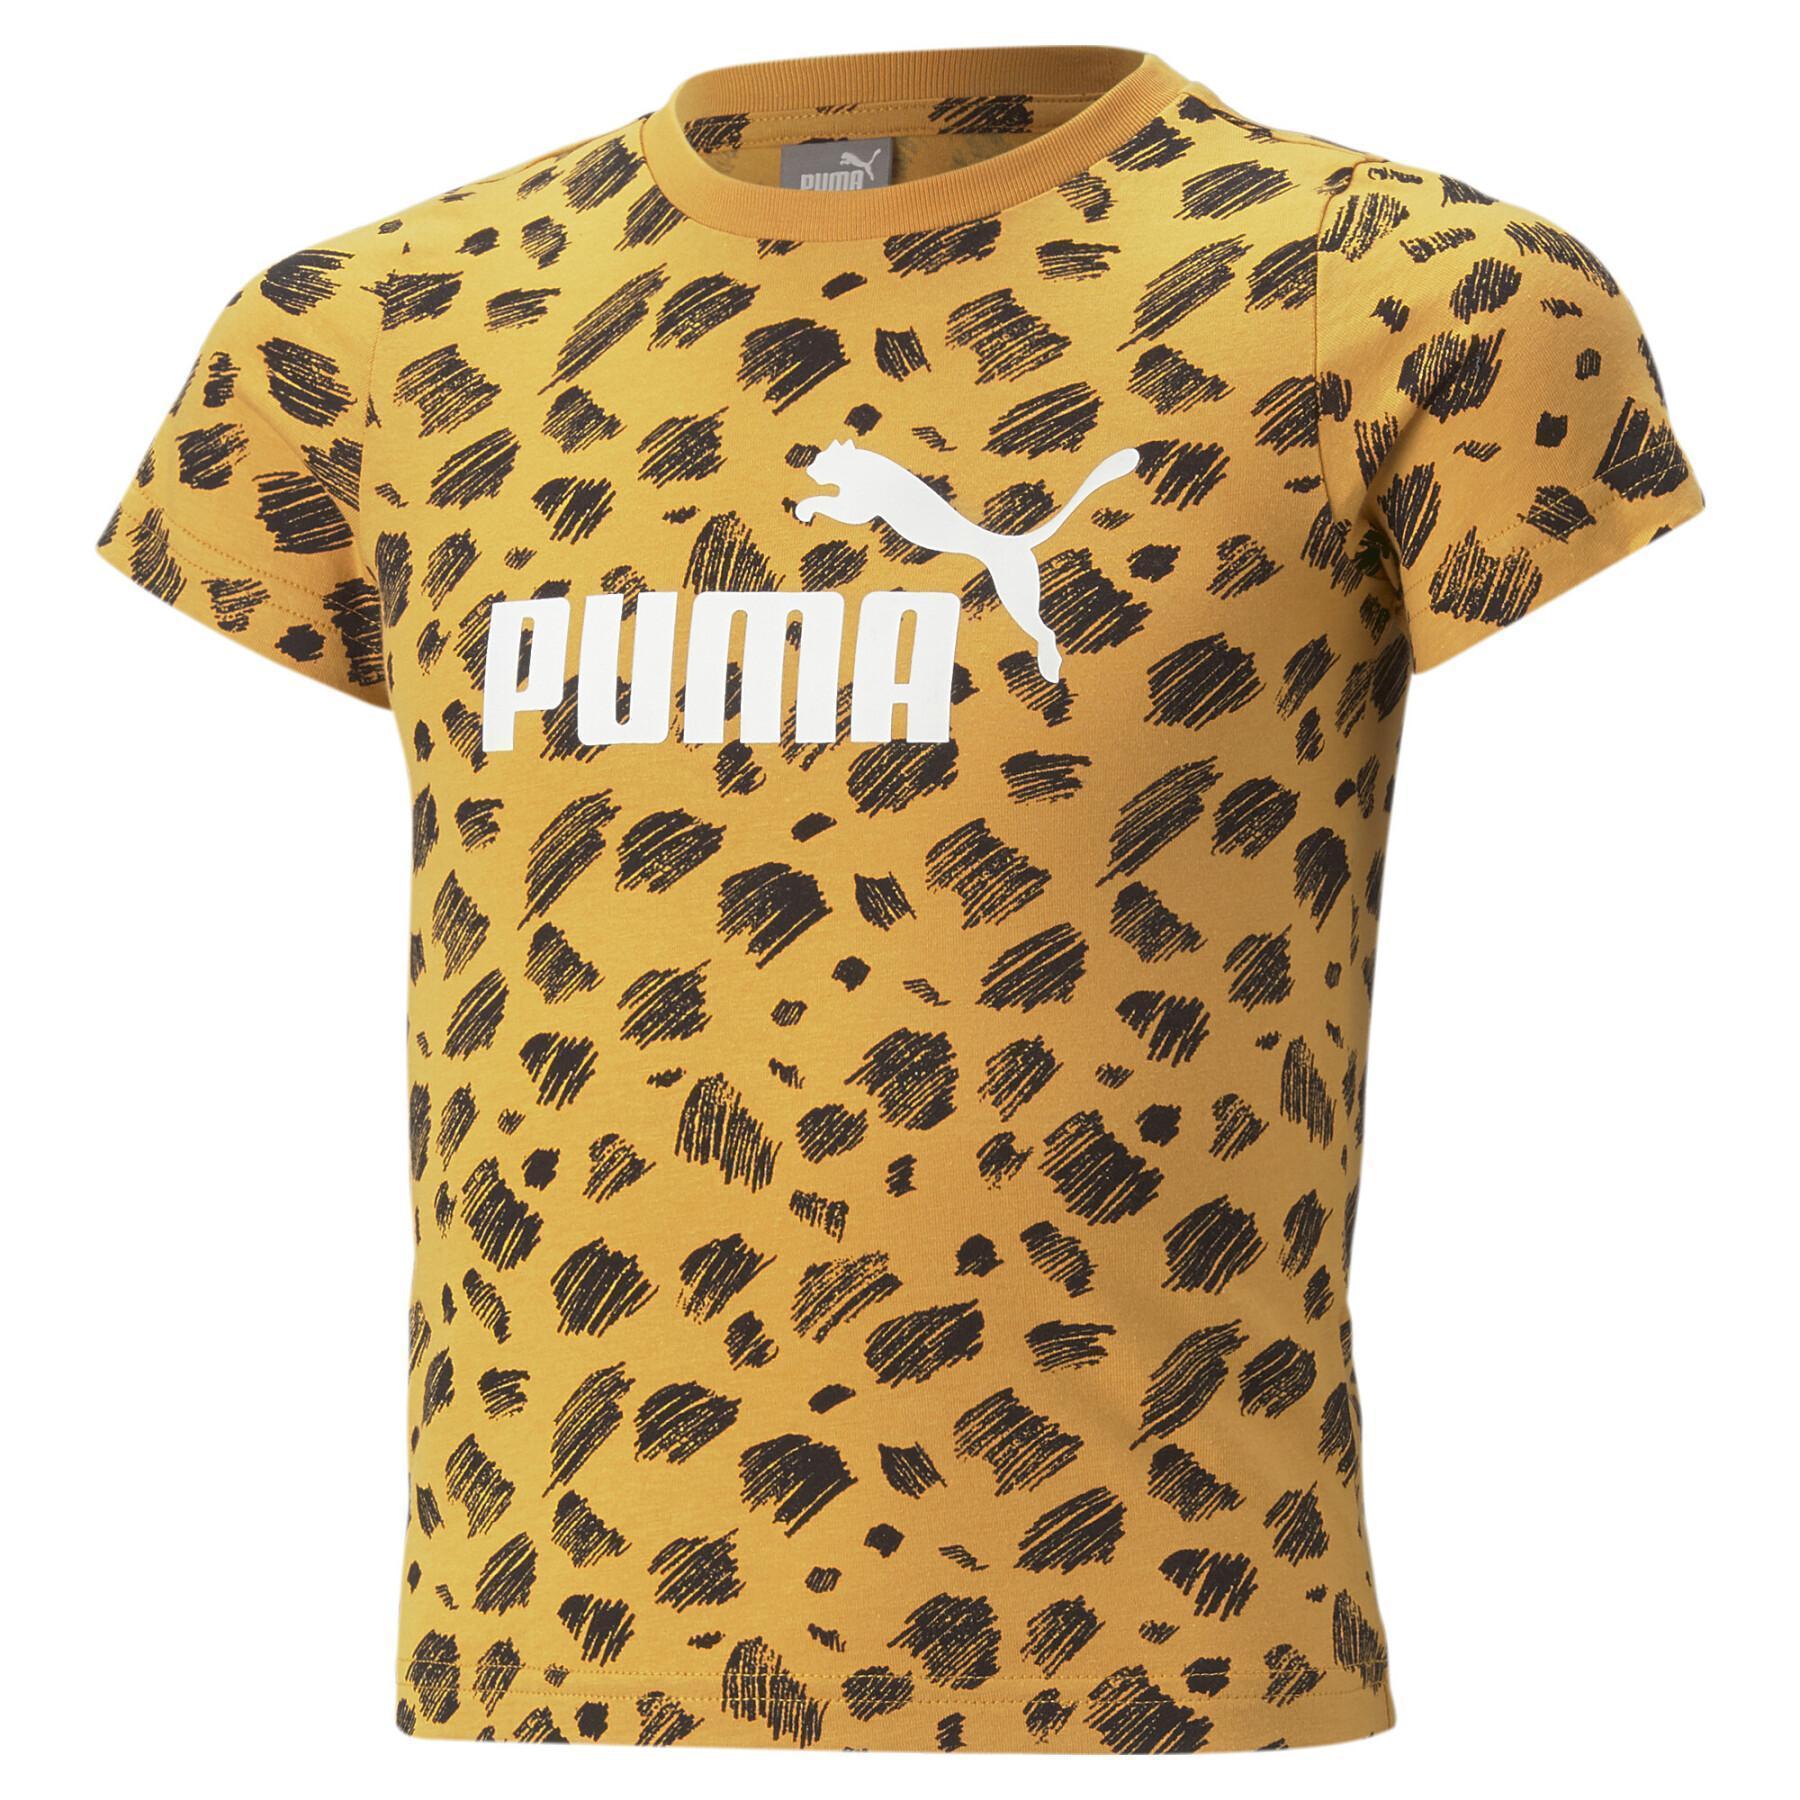 Kinder-T-shirt Puma Ess+ Mates Aop